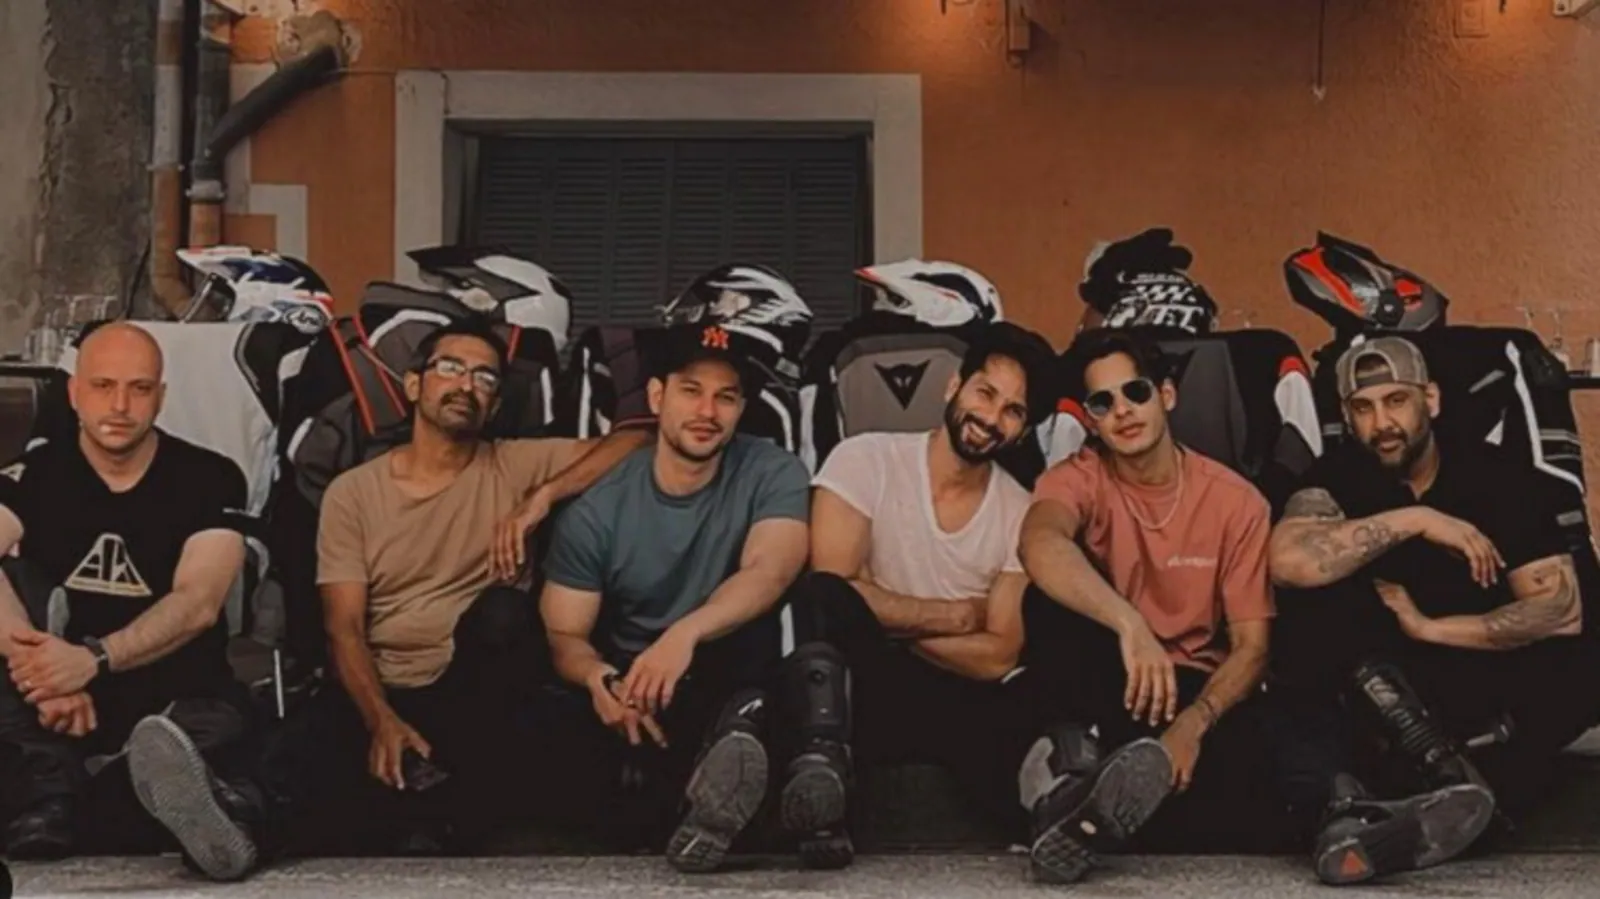 Shahid Kapoor, Ishaan Khatter, Kunal Kemmu post new pics from biking trip; fans call them ‘Indian Fast and Furious team’